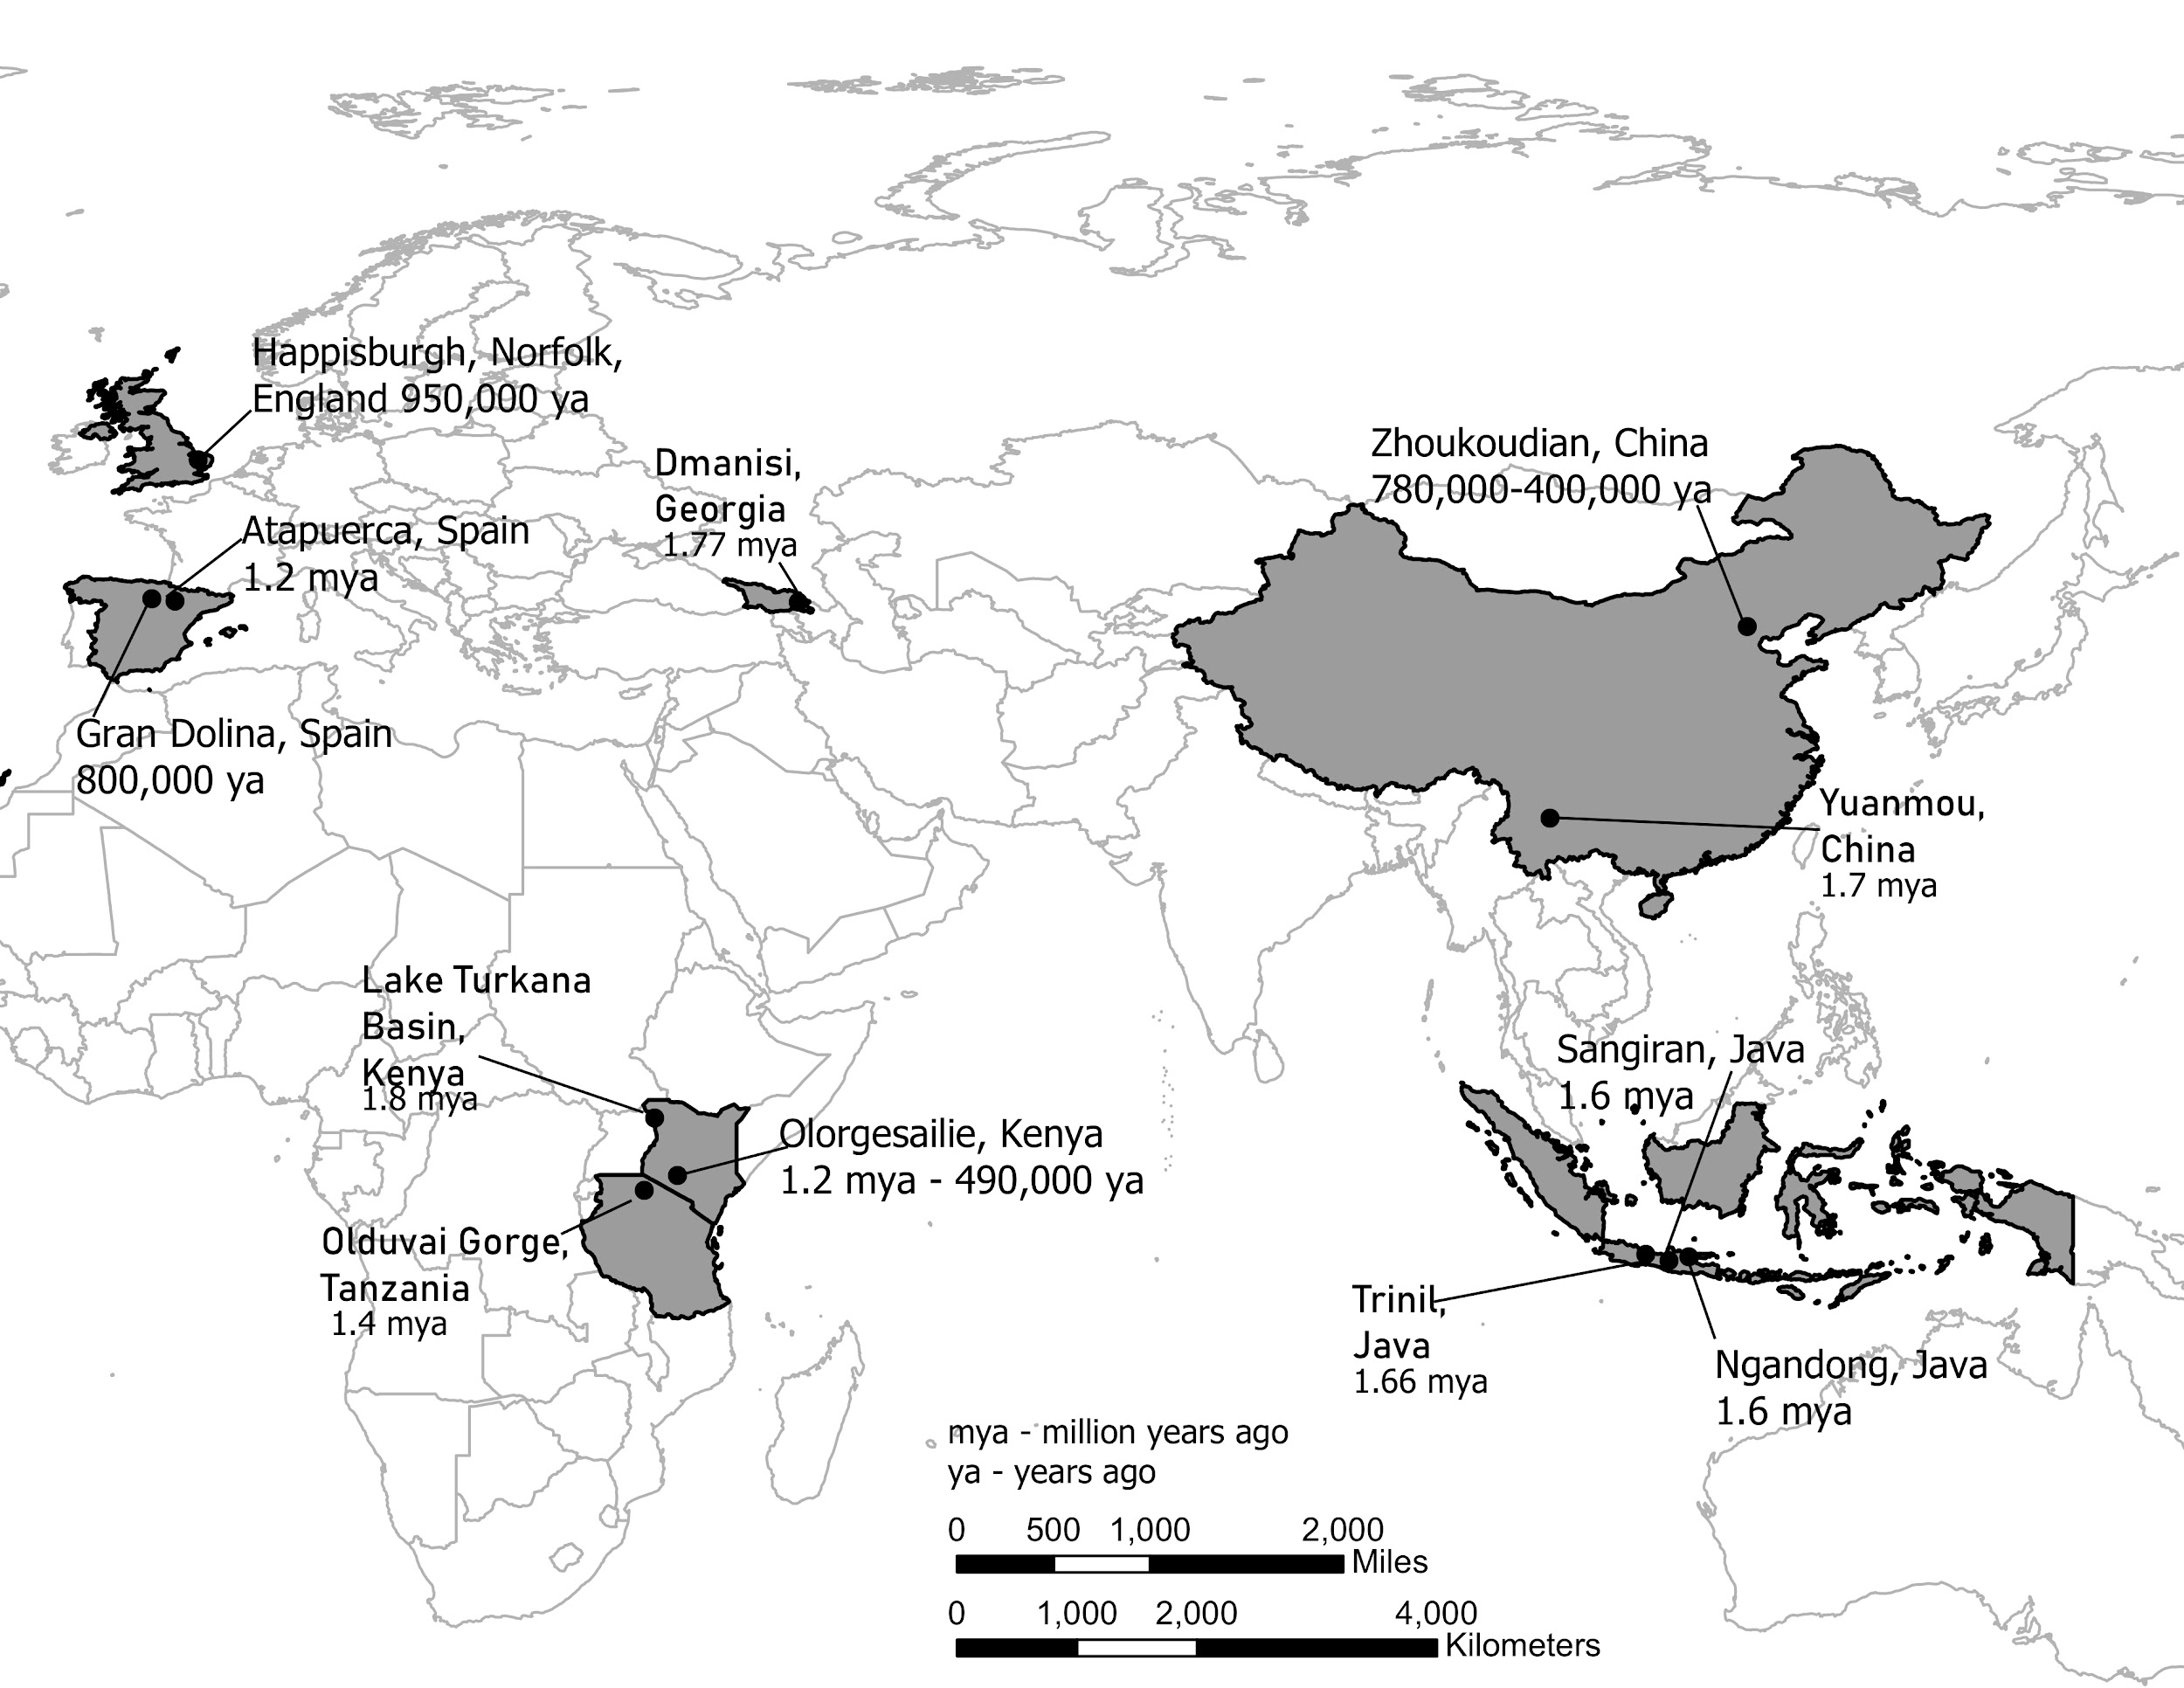 World map with England, Spain, Georgia, Kenya, China, and Java shaded.